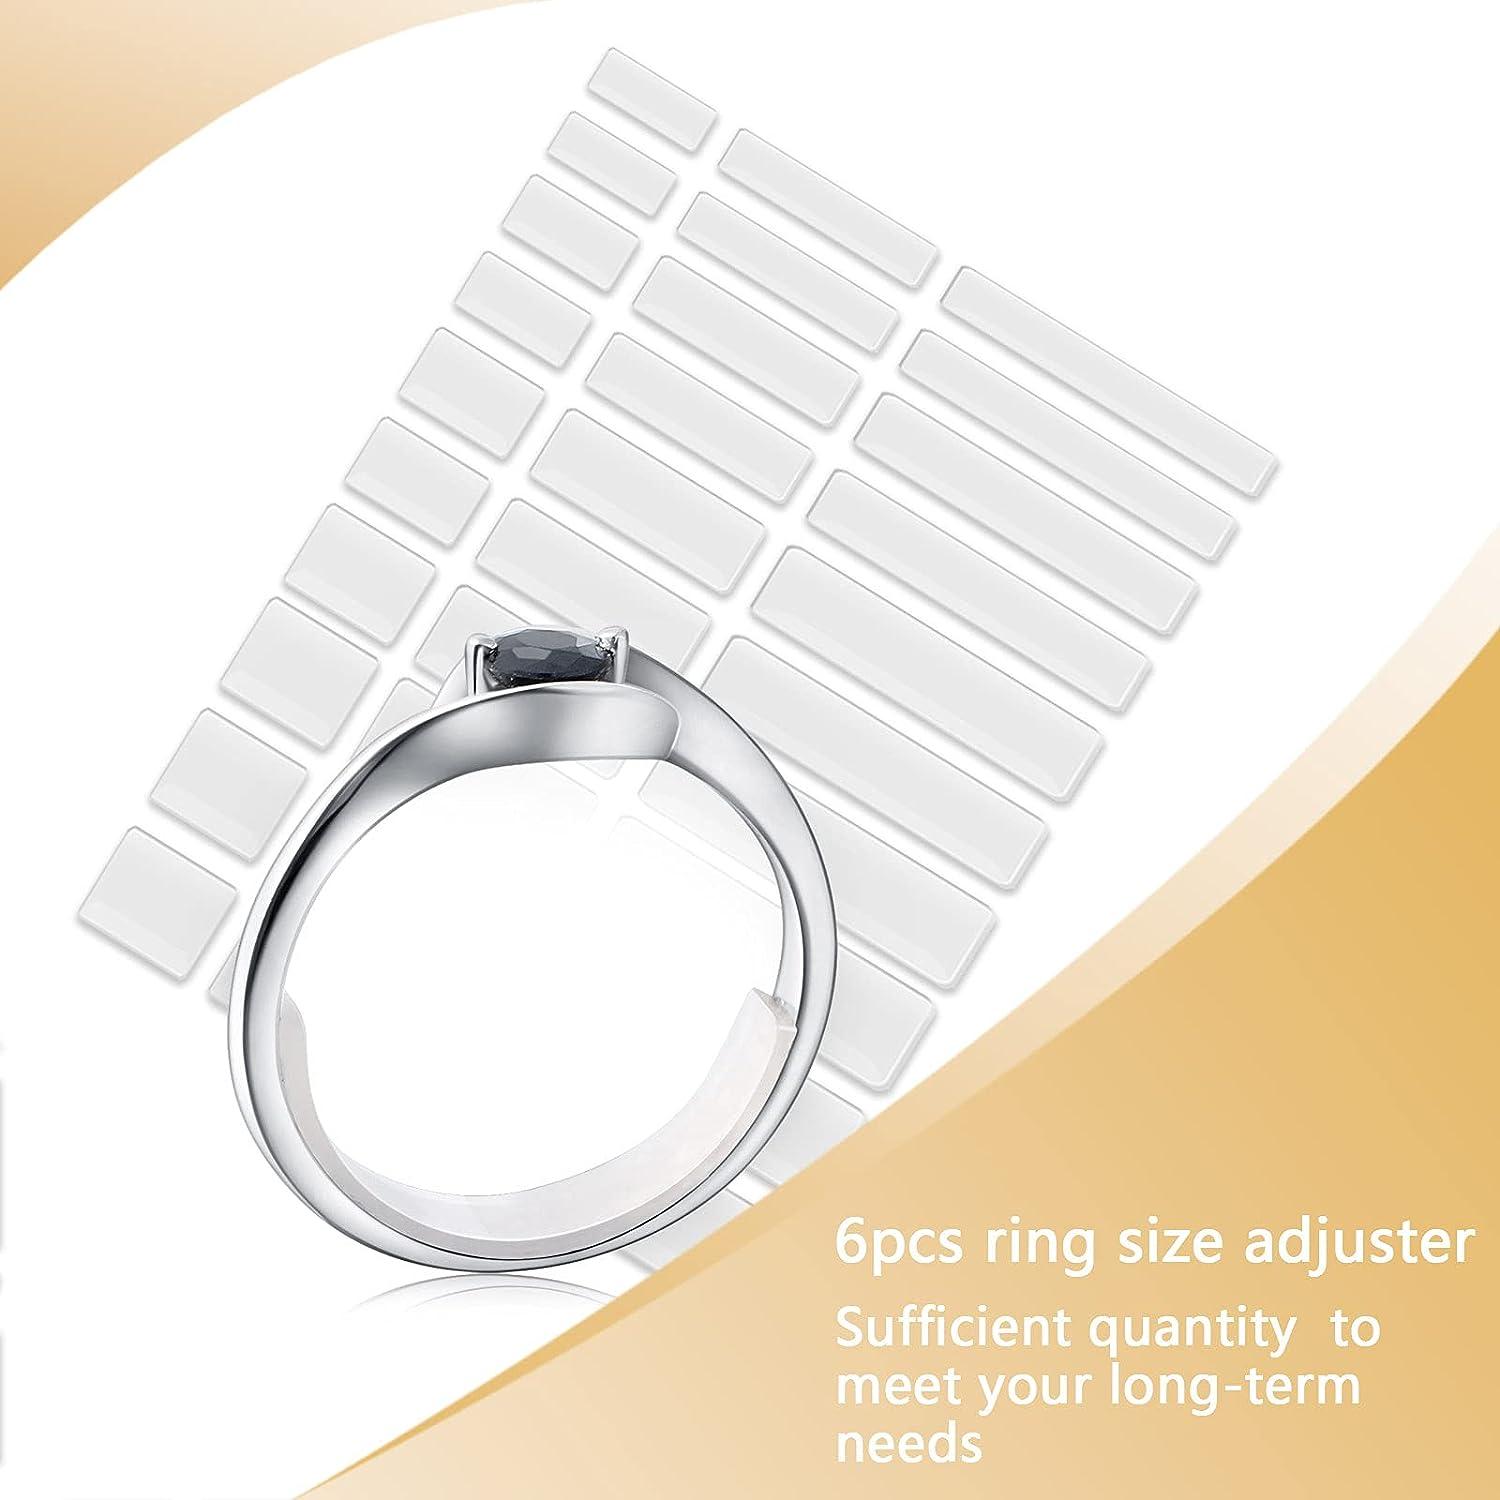 Ring Snuggies - Ring Size Adjusters (6-pcs)